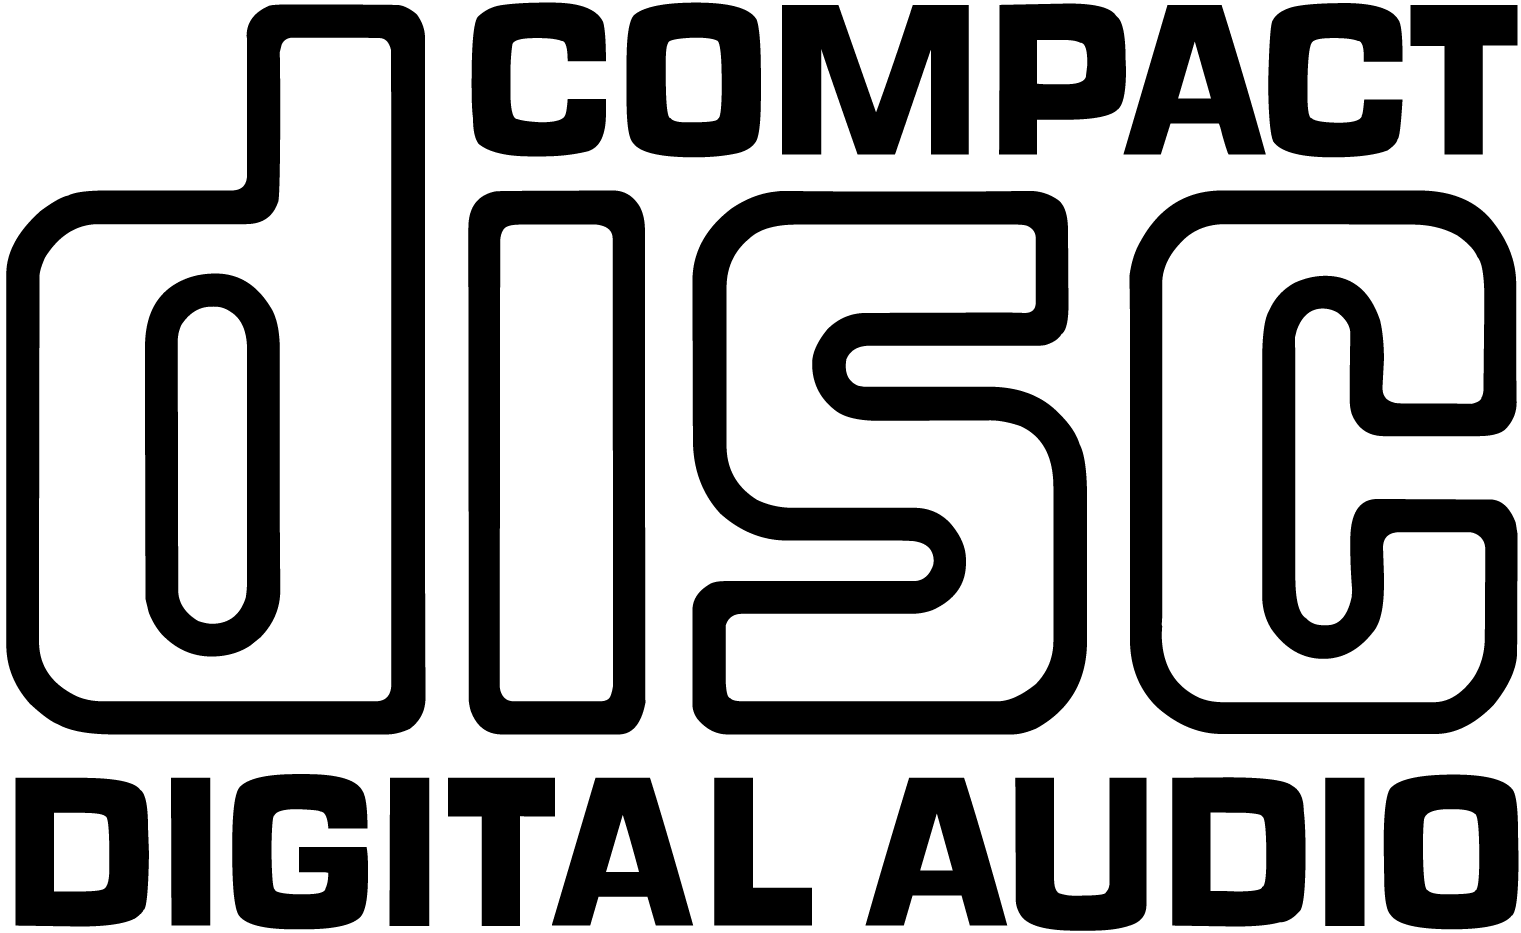 Compact Disc Logo - CD AUDIO Logo.png